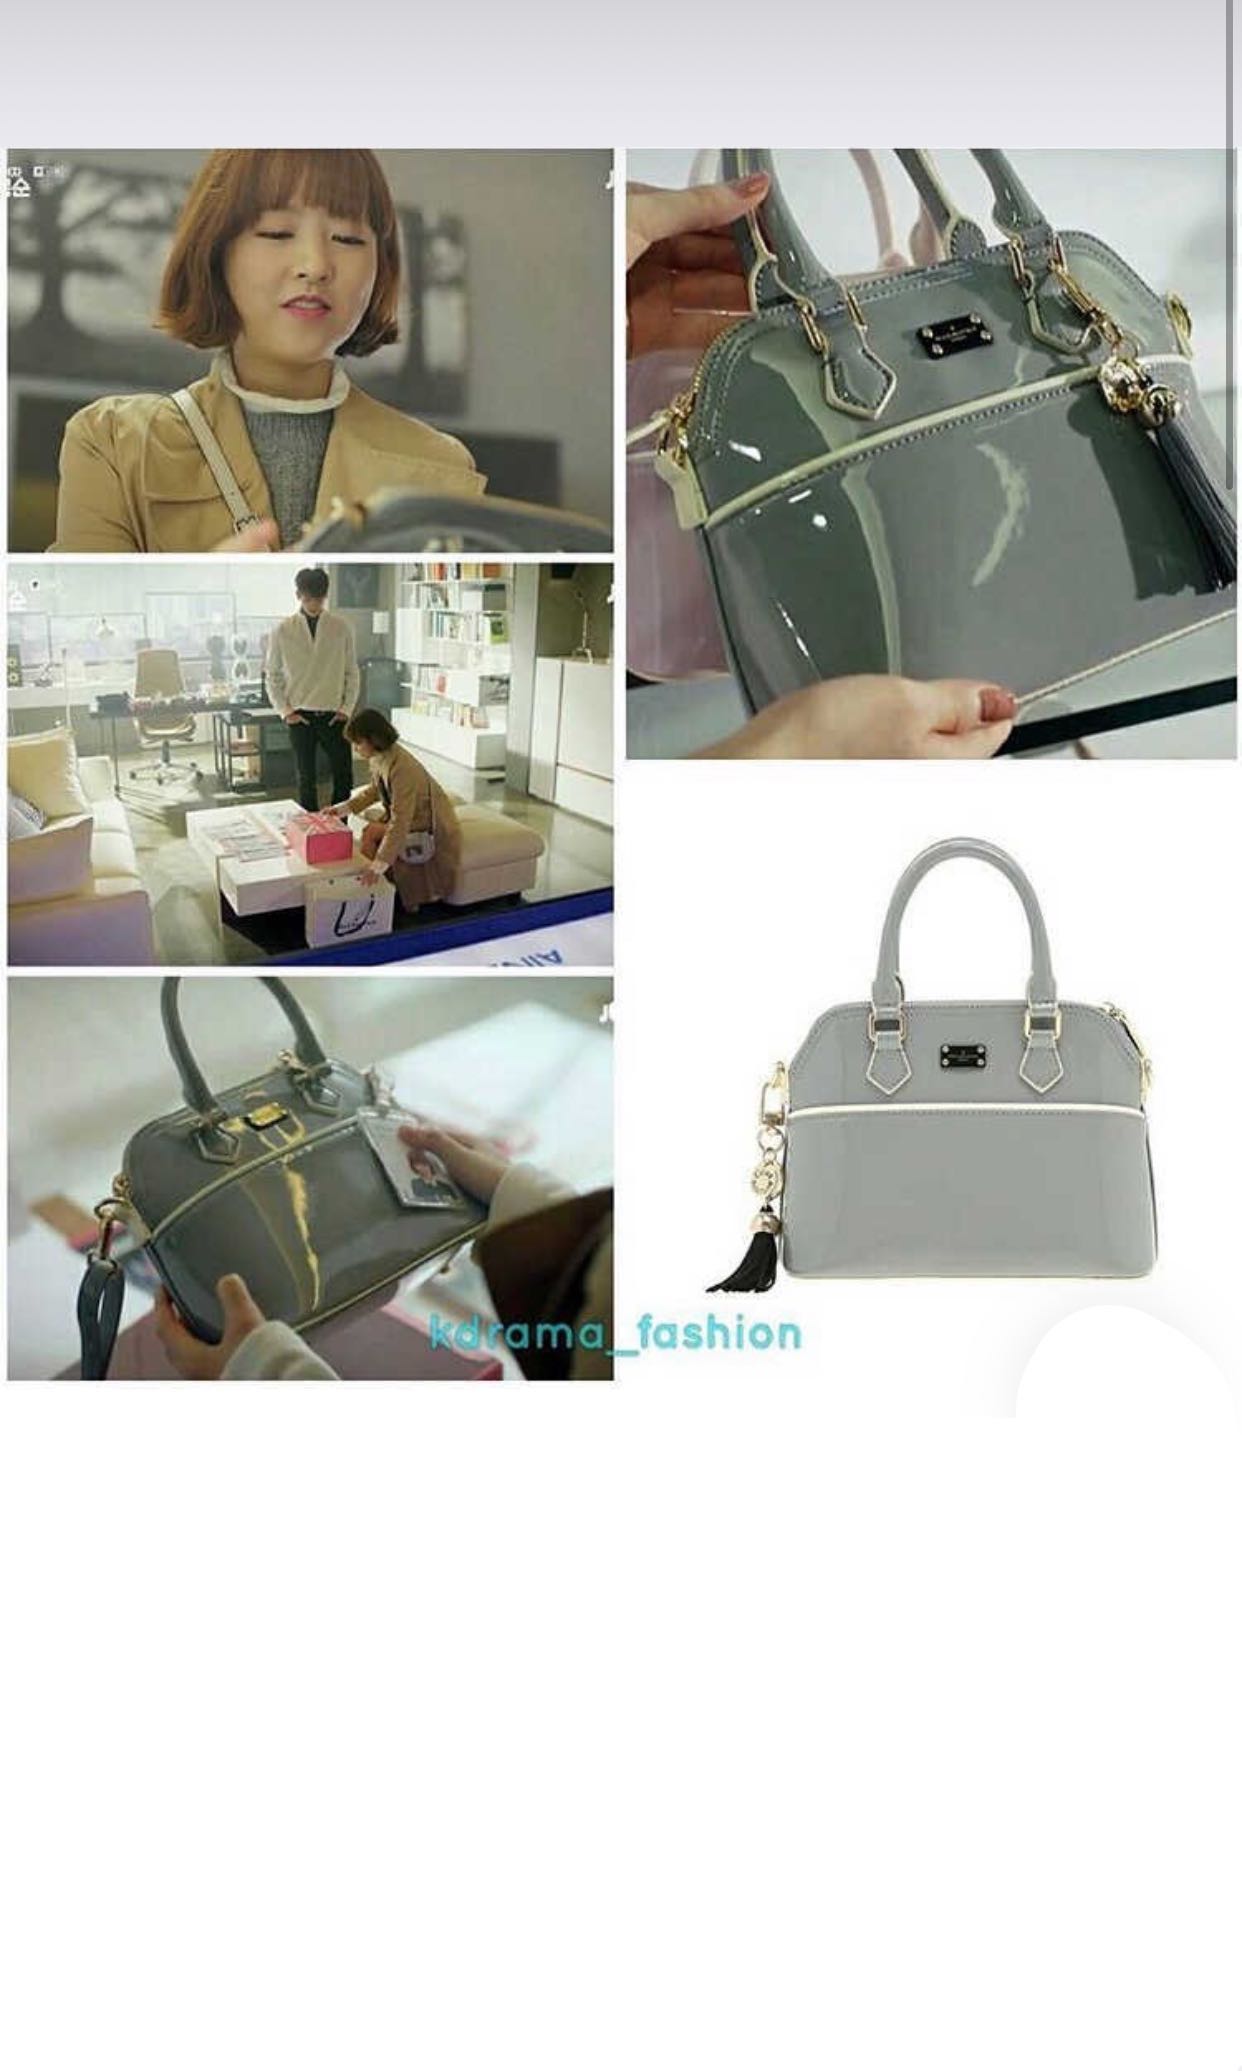 Paul's Boutique: Web Exclusive handbags online now. The Mini-Maisy is back!